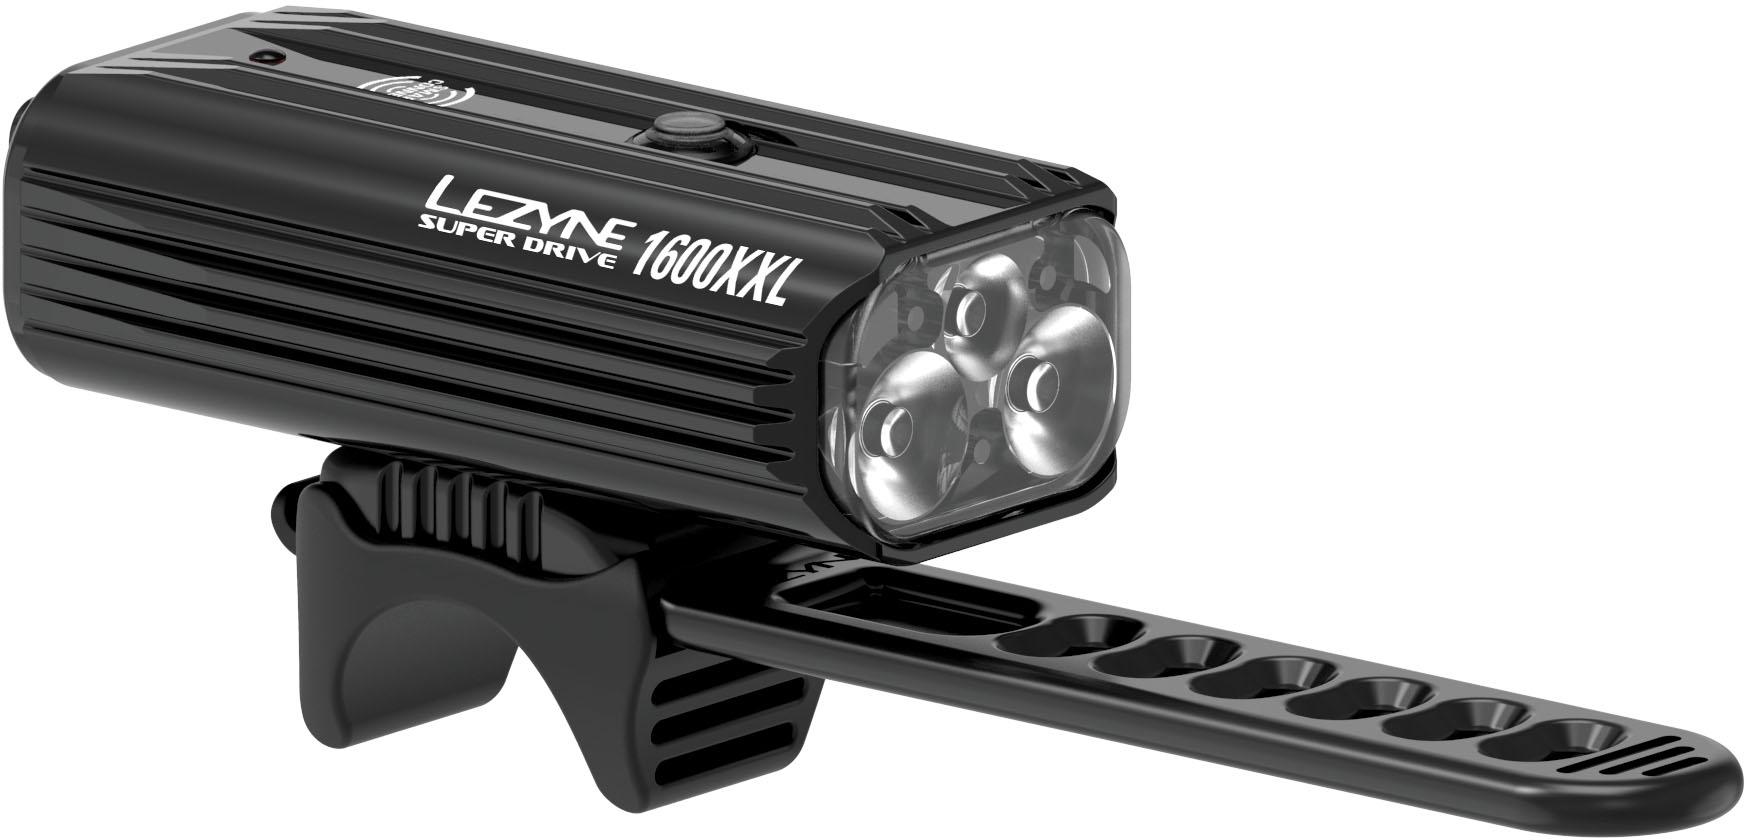 Lezyne Super Drive 1600Xxl Lumen Front Bike Light, Black/Hi Gloss